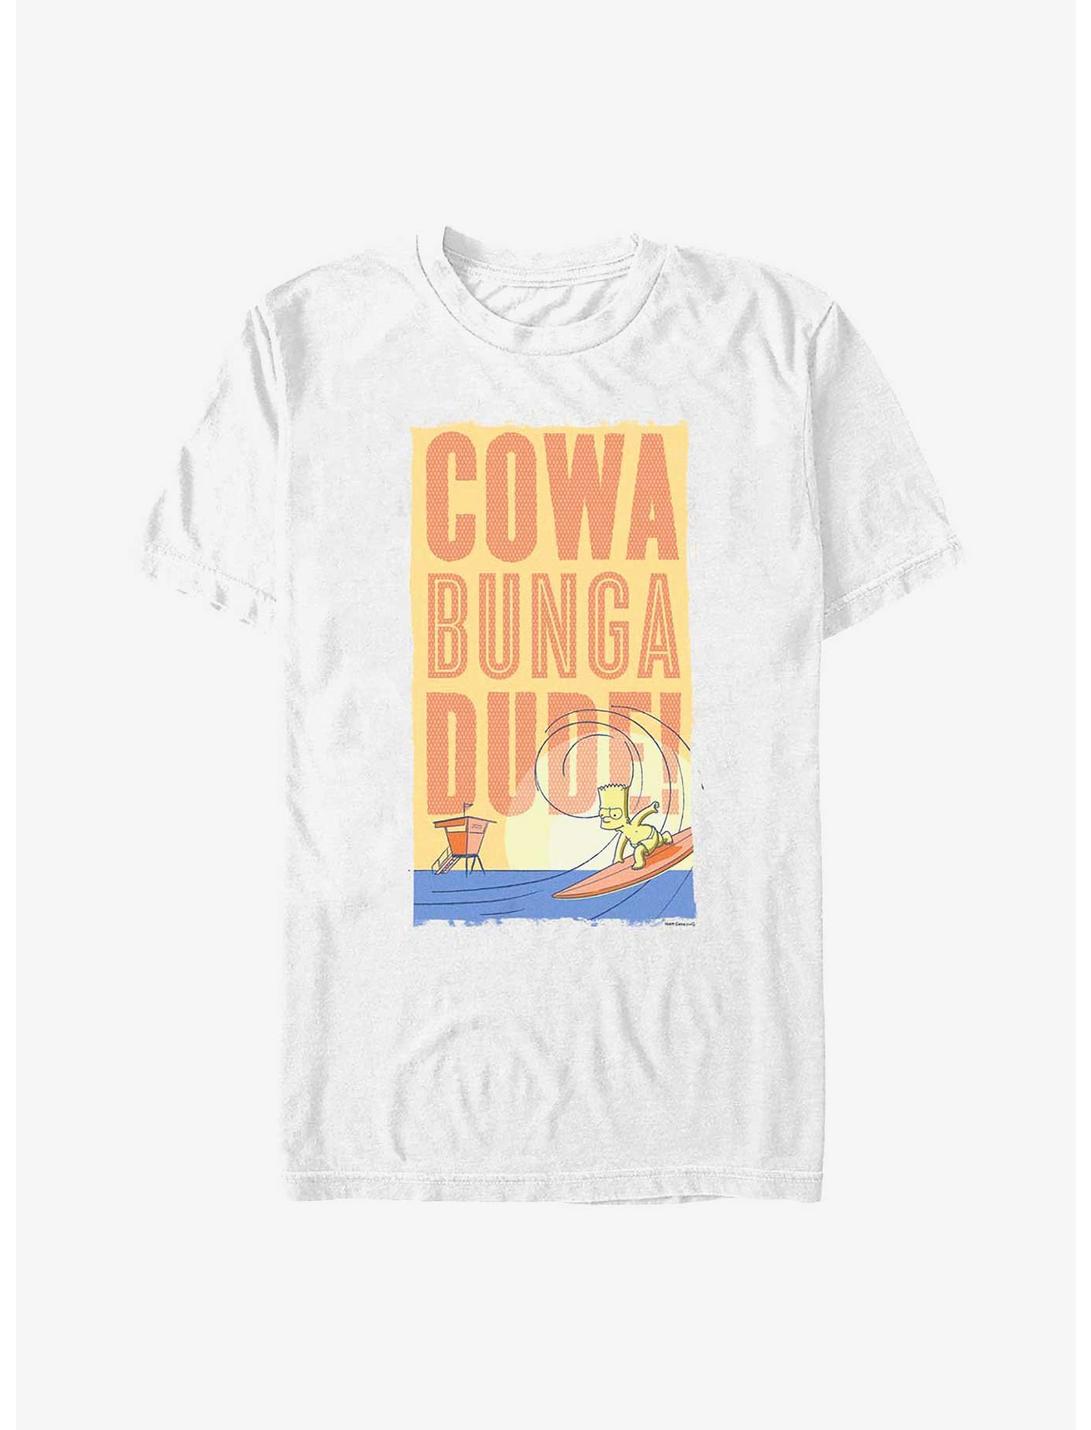 The Simpsons Cowa Bunga Dude T-Shirt, WHITE, hi-res